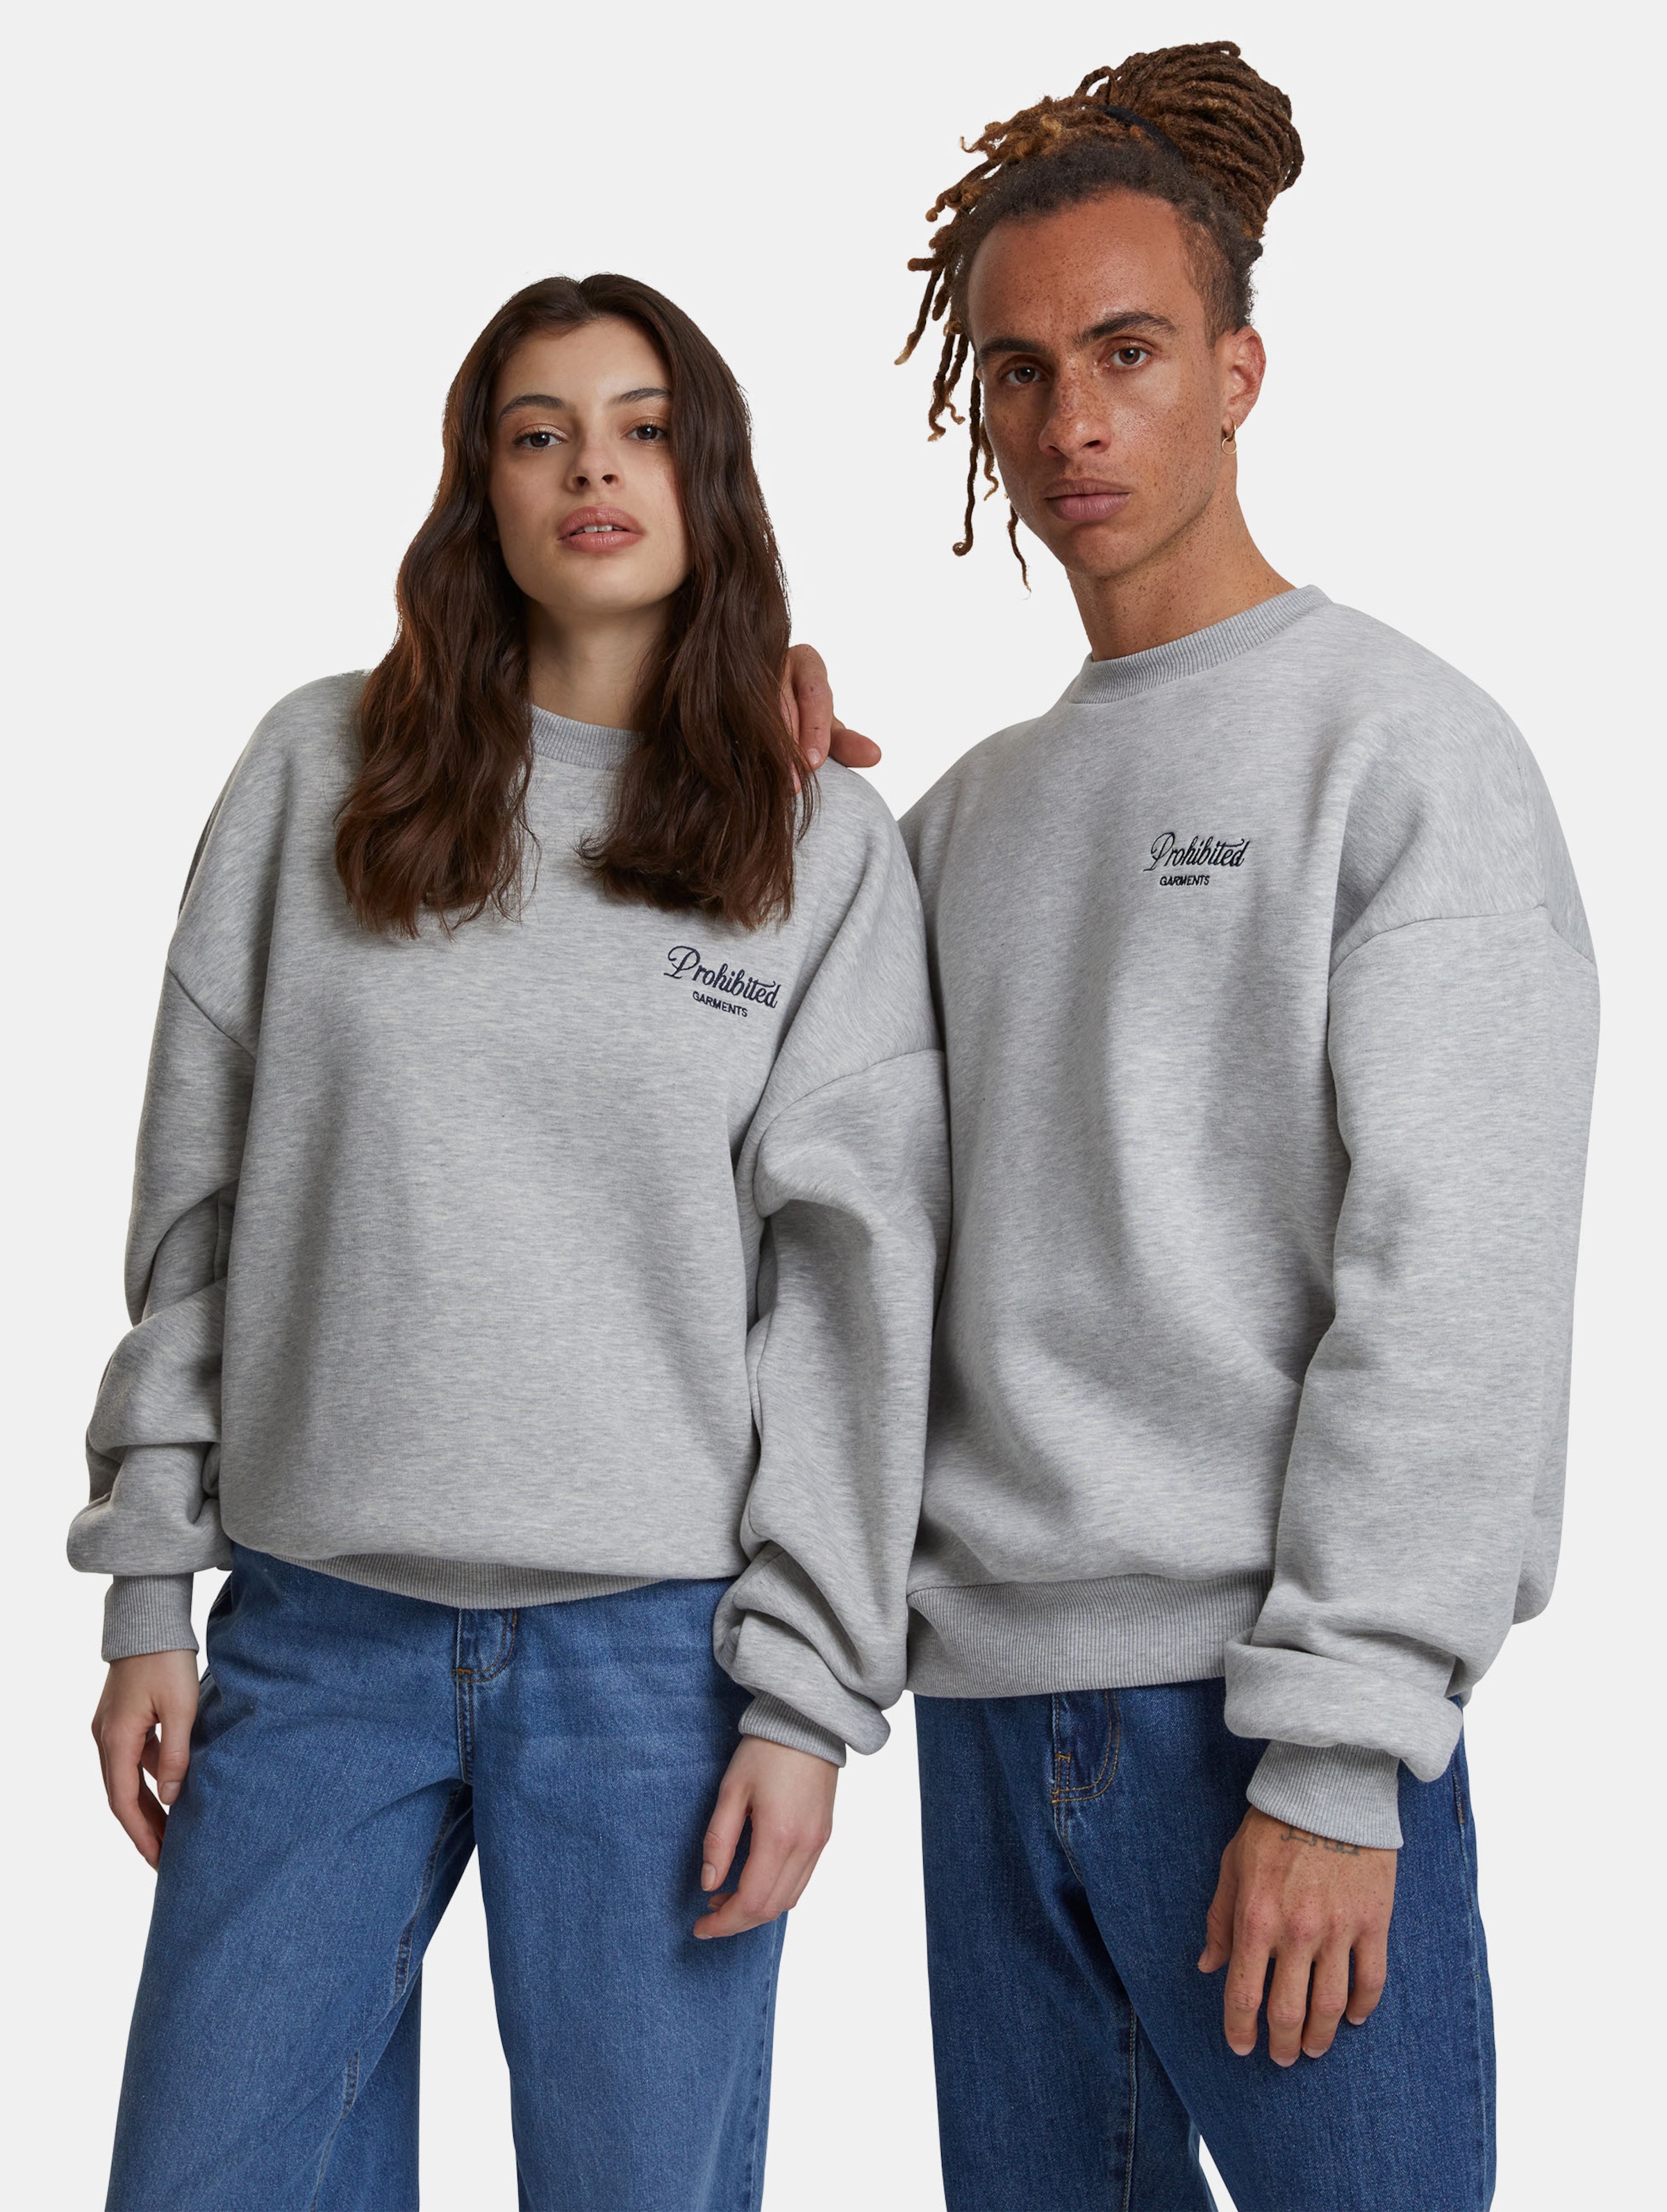 Prohibited PB Garment Crew Neck Pullover Frauen,Männer,Unisex op kleur grijs, Maat XL